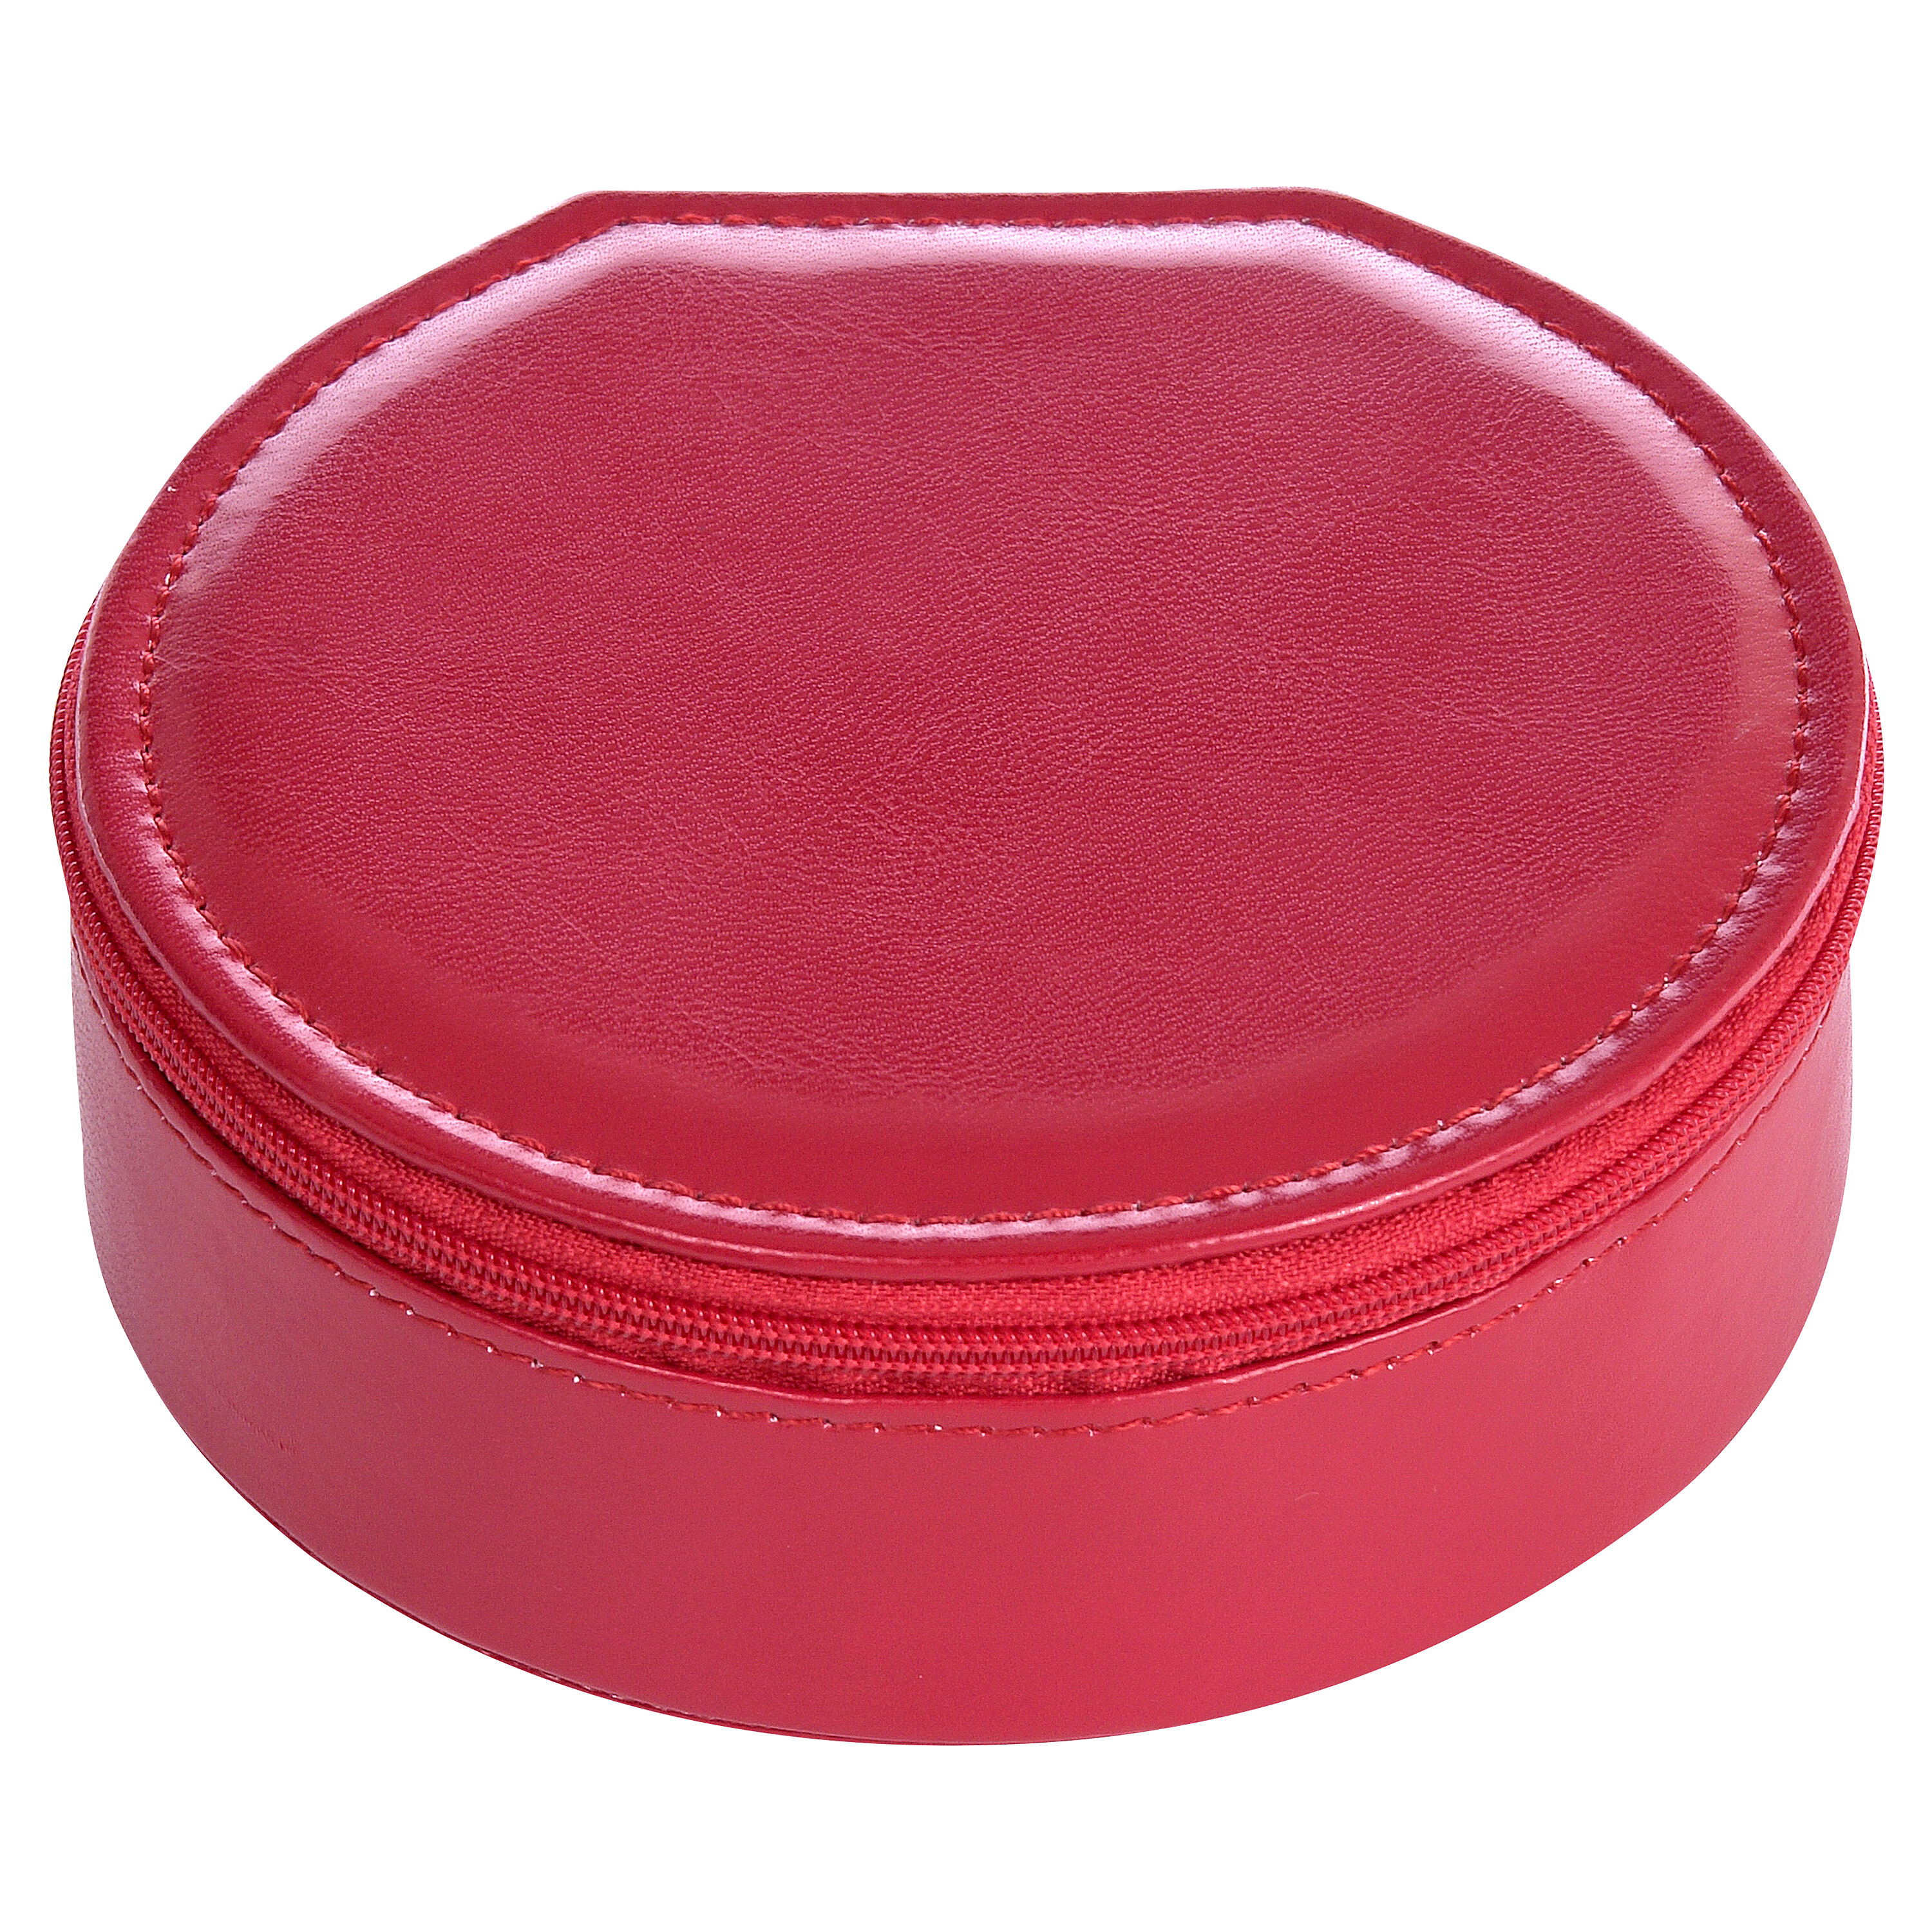 Betsy jewellery box standard / red